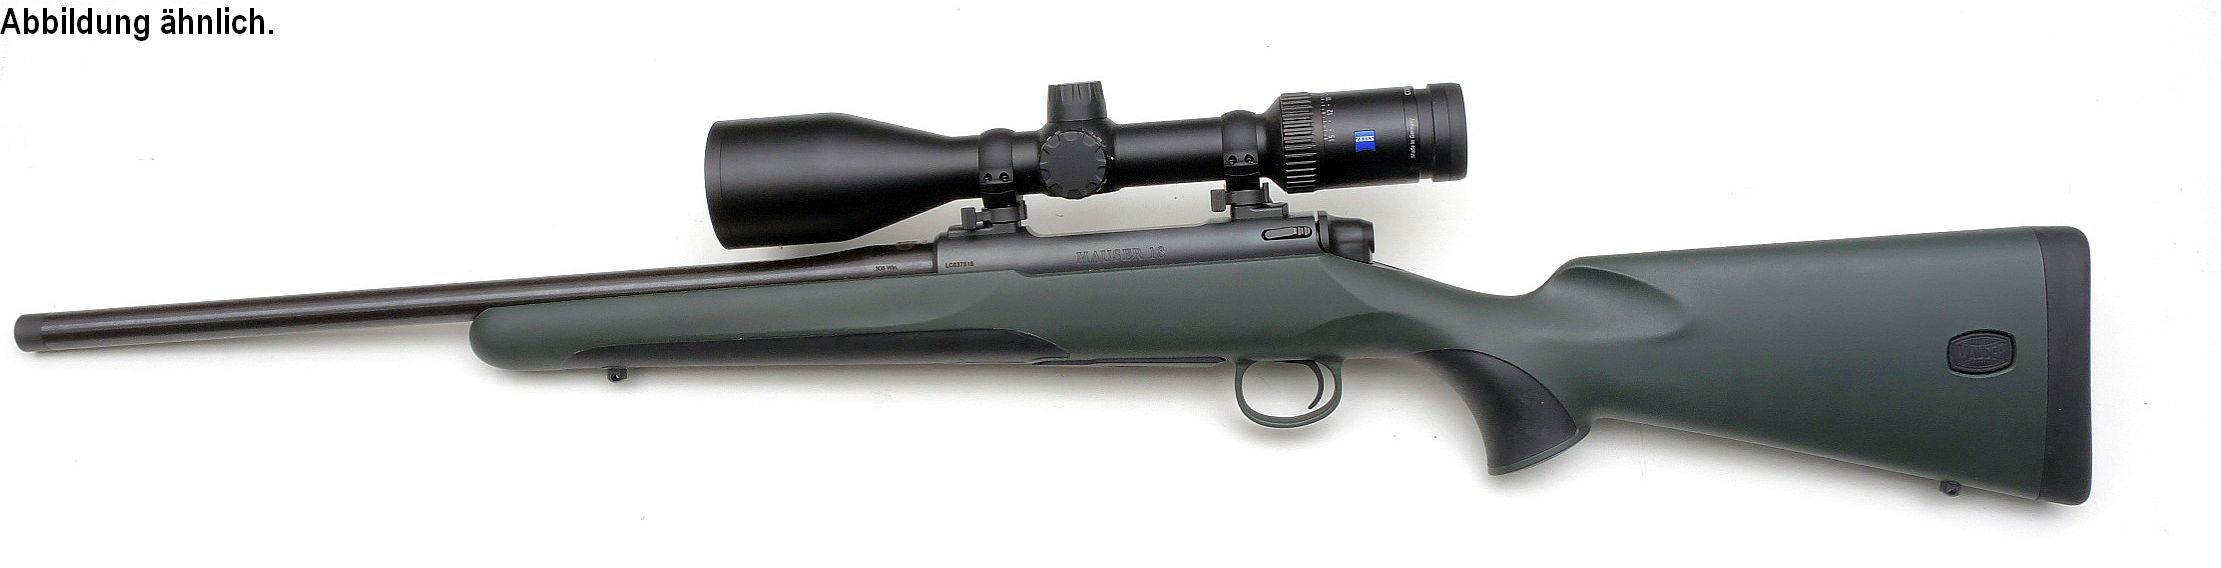 Mauser M18 Waldjagd 30-06 mit Zeiss V6 2-12x50